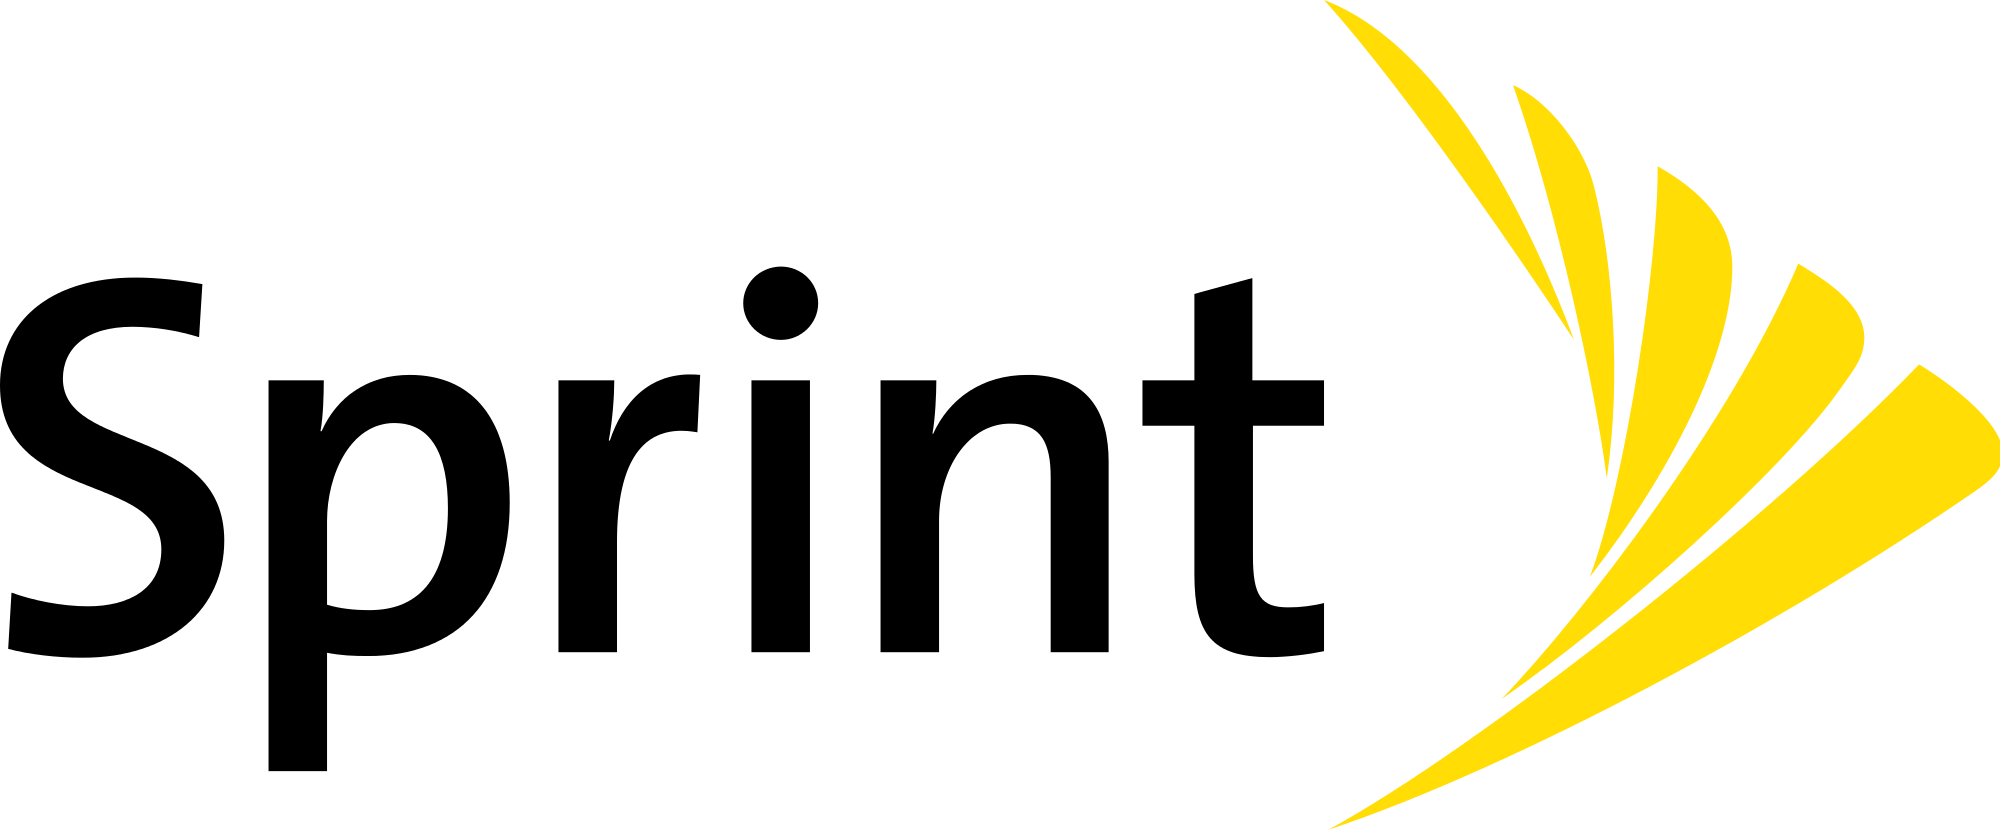 Sprint_Logo.png - Line Up, Transparent background PNG HD thumbnail